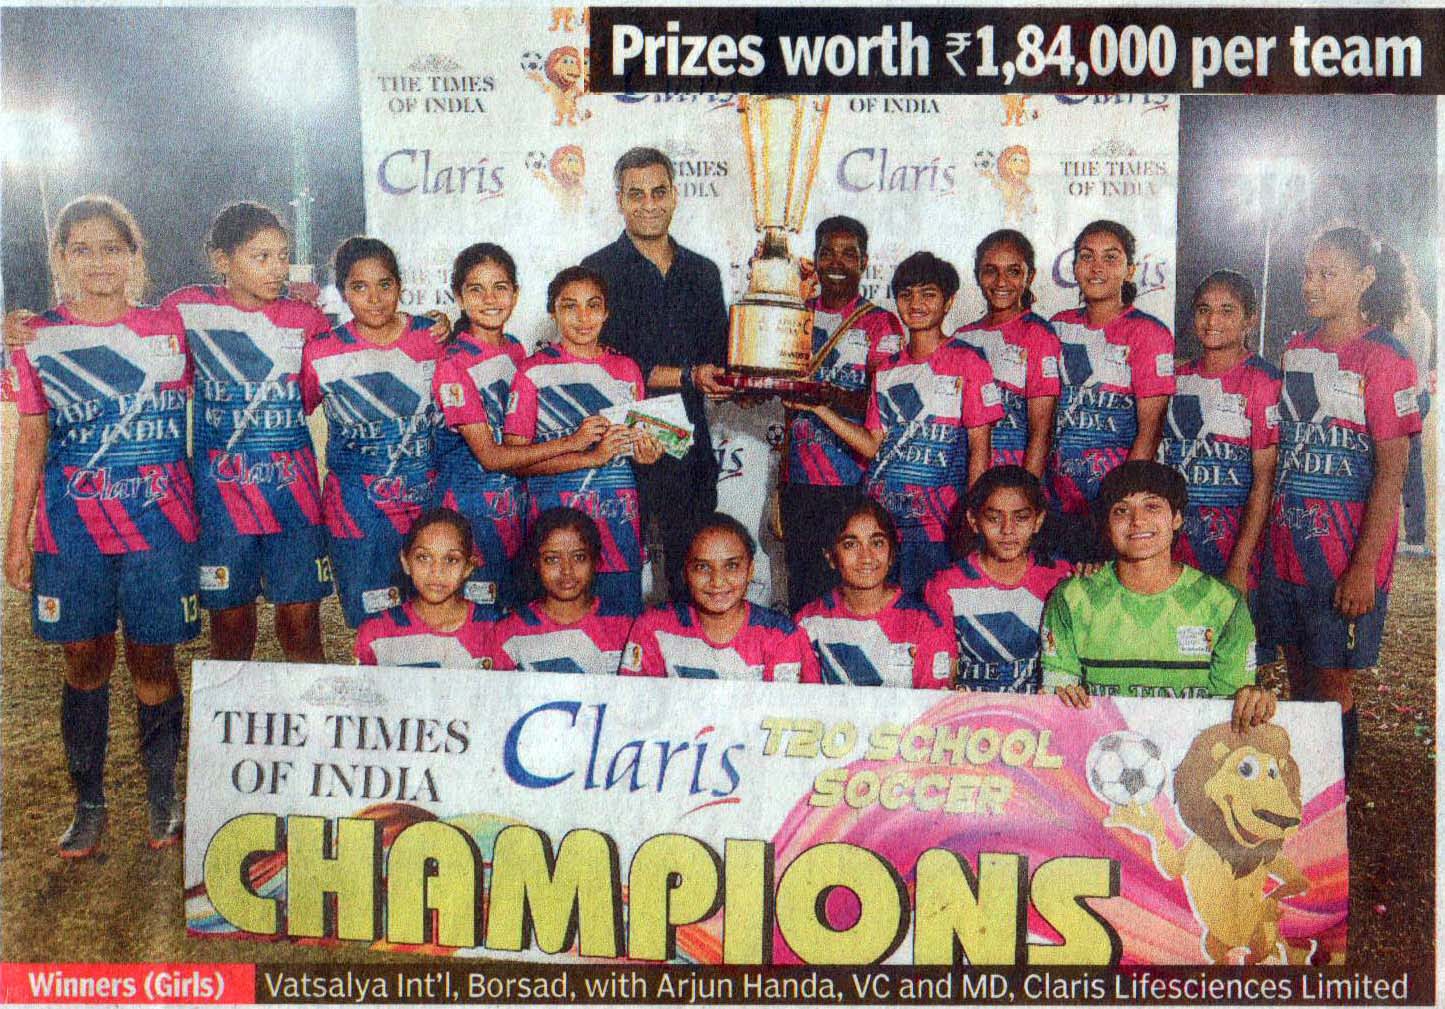 Vatsalya International, Borsad, Win Girls' Title for the Third Straight Year on Action-Packed Final Day